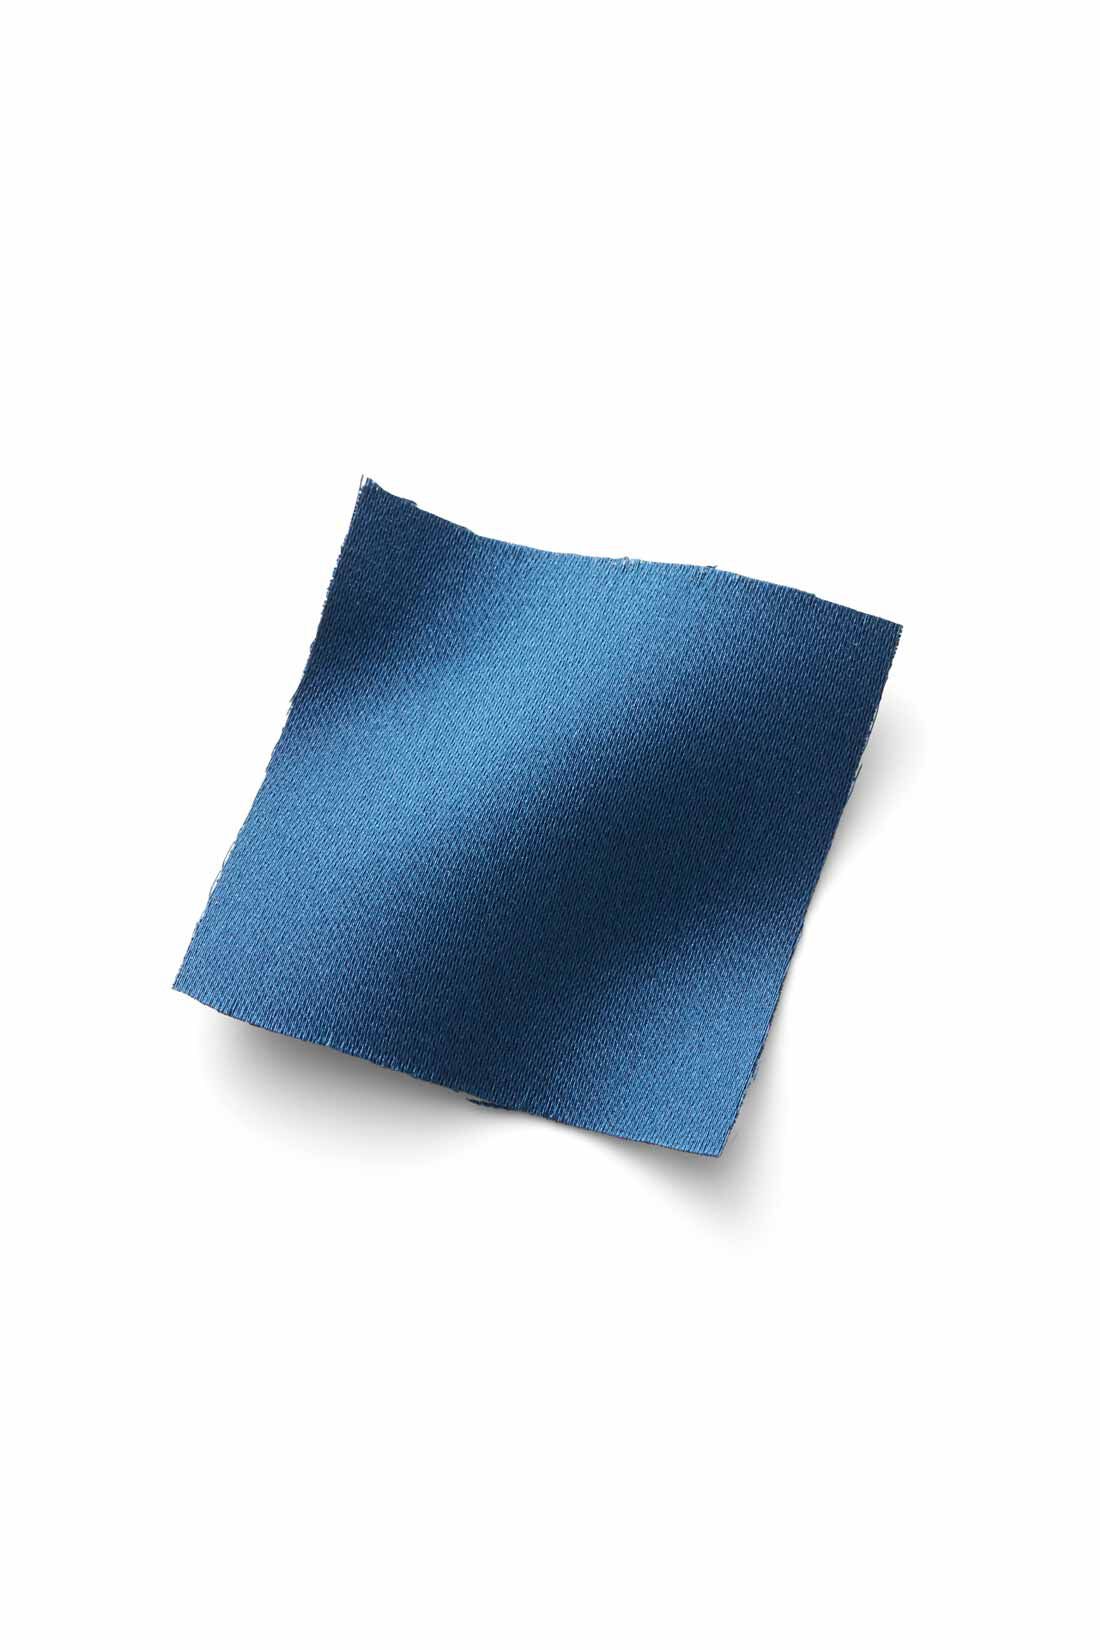 IEDIT|IEDIT[イディット]　サテンの光沢が美しいセミサーキュラースカート〈ベージュ〉|からだのラインを拾いにくい厚手のサテン素材を厳選。